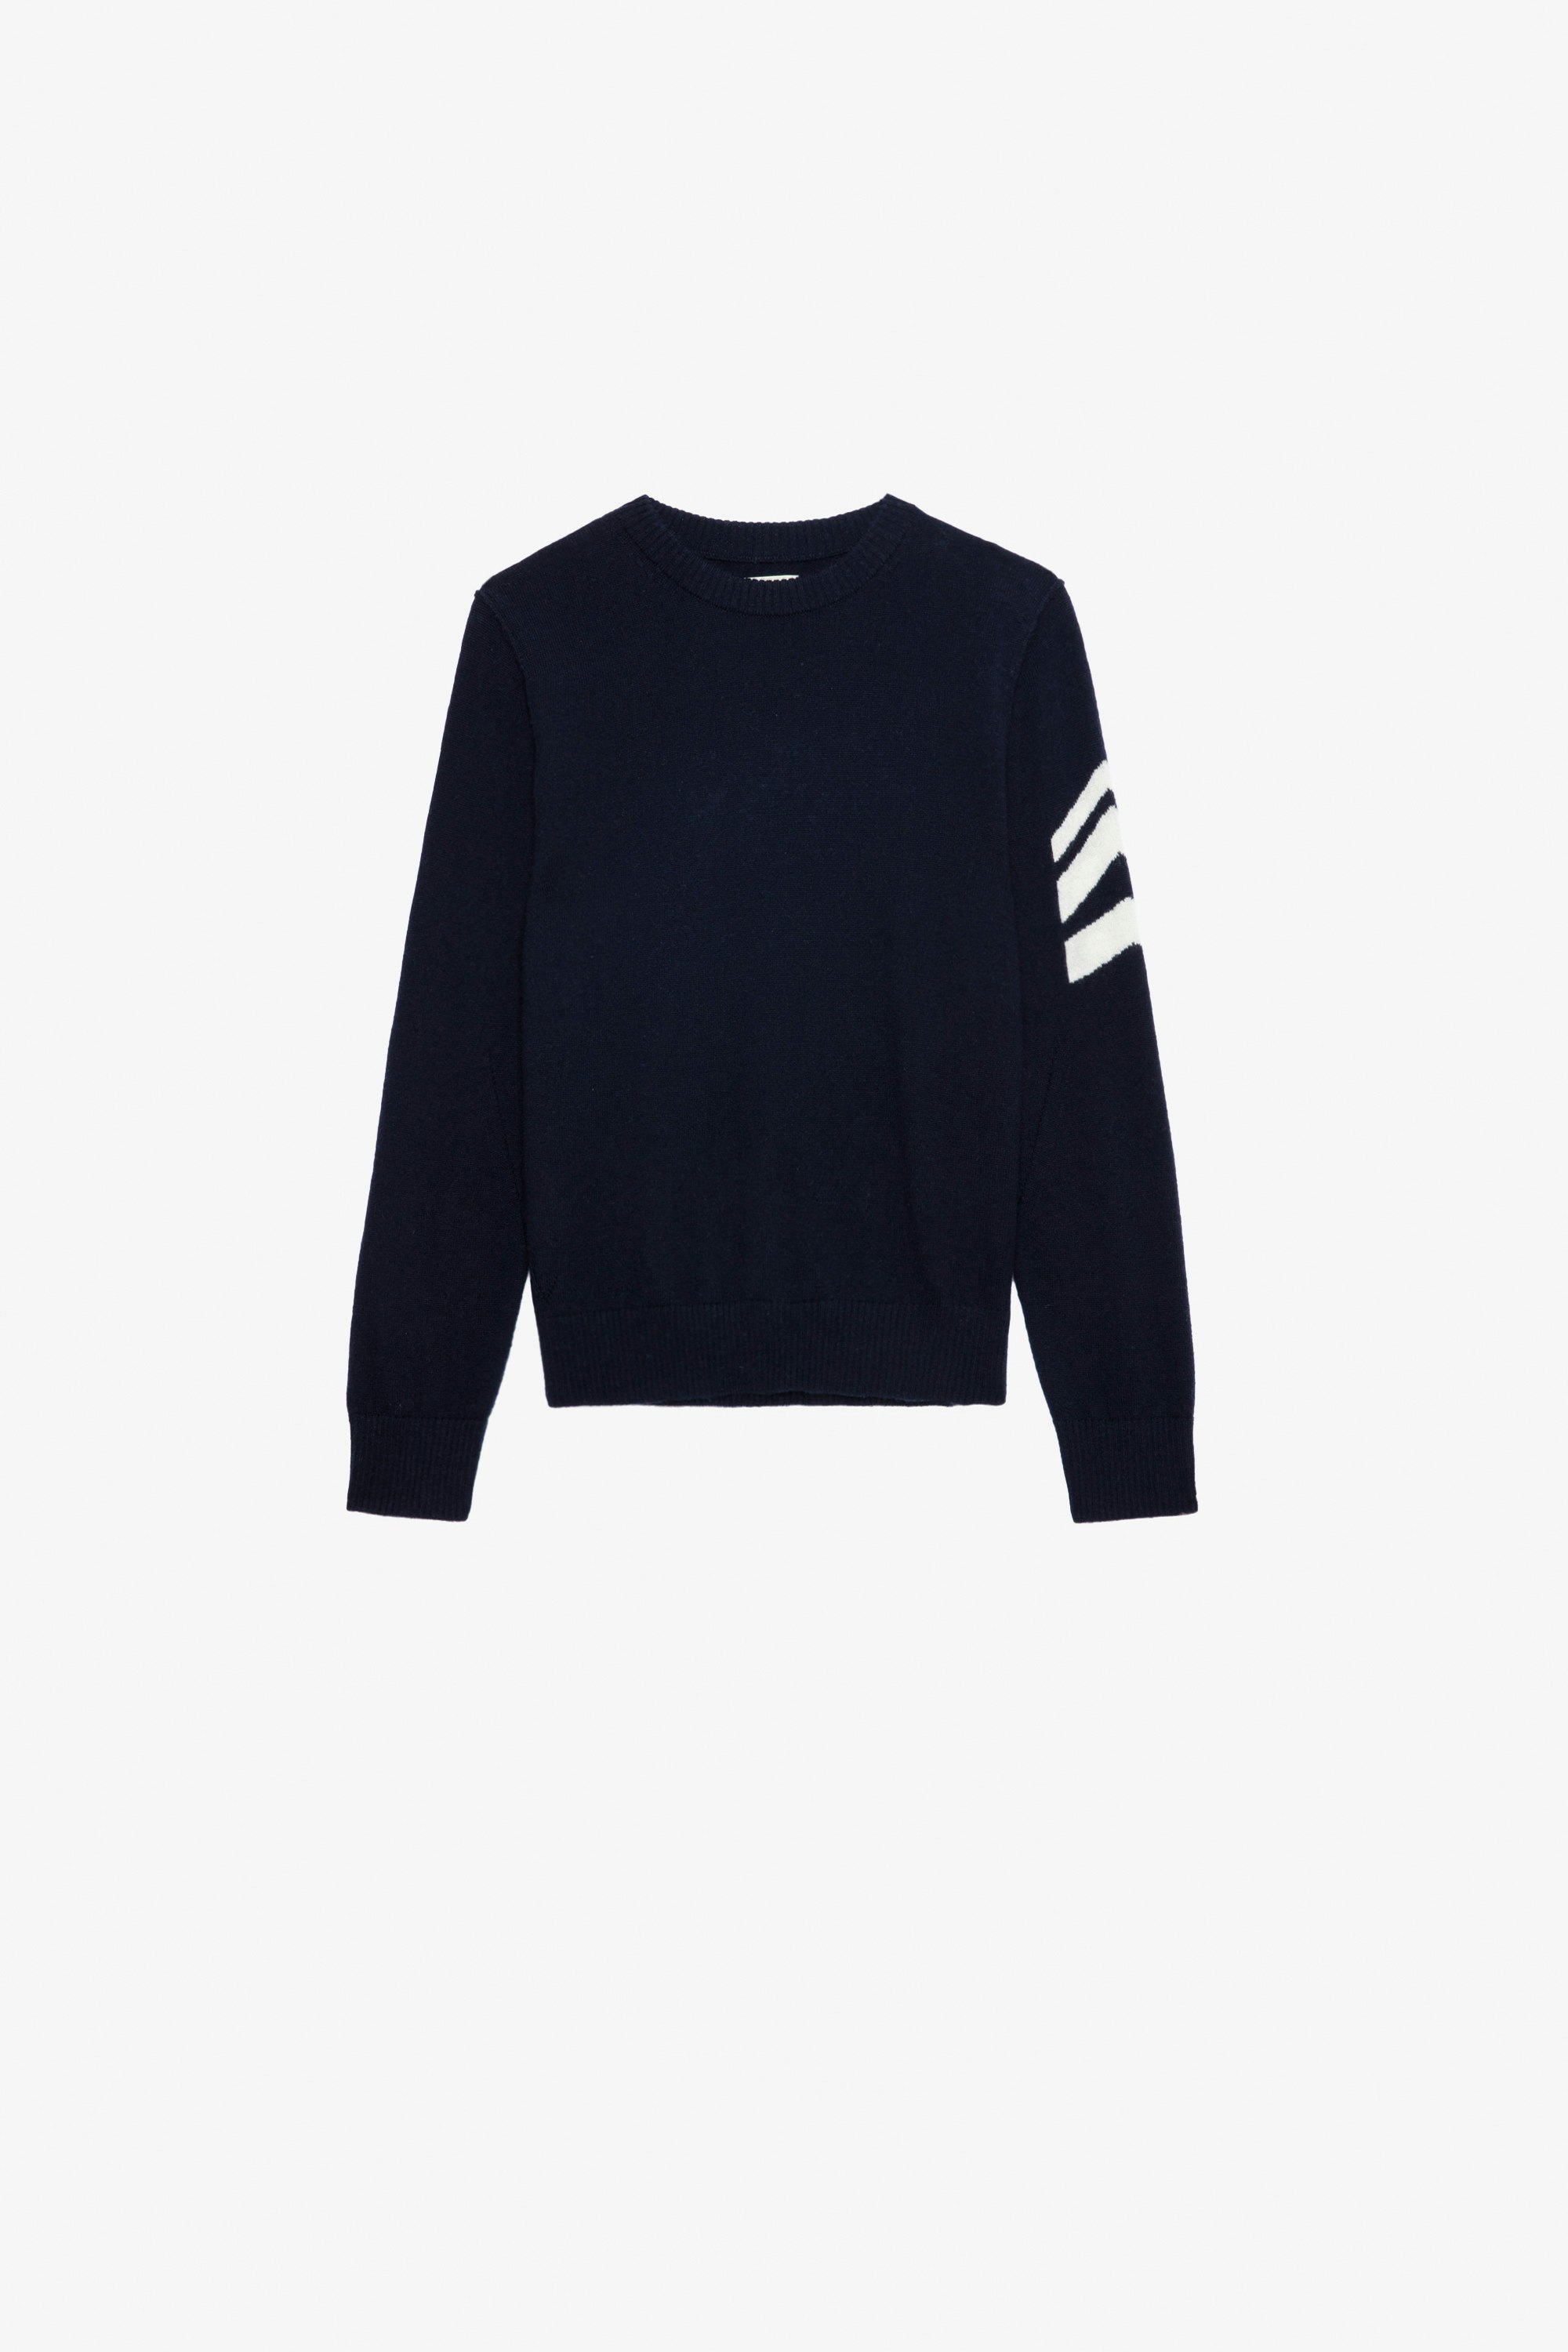 Chris Boys’ Sweater - Boys’ navy blue knit sweater with “Dreamer” slogan.